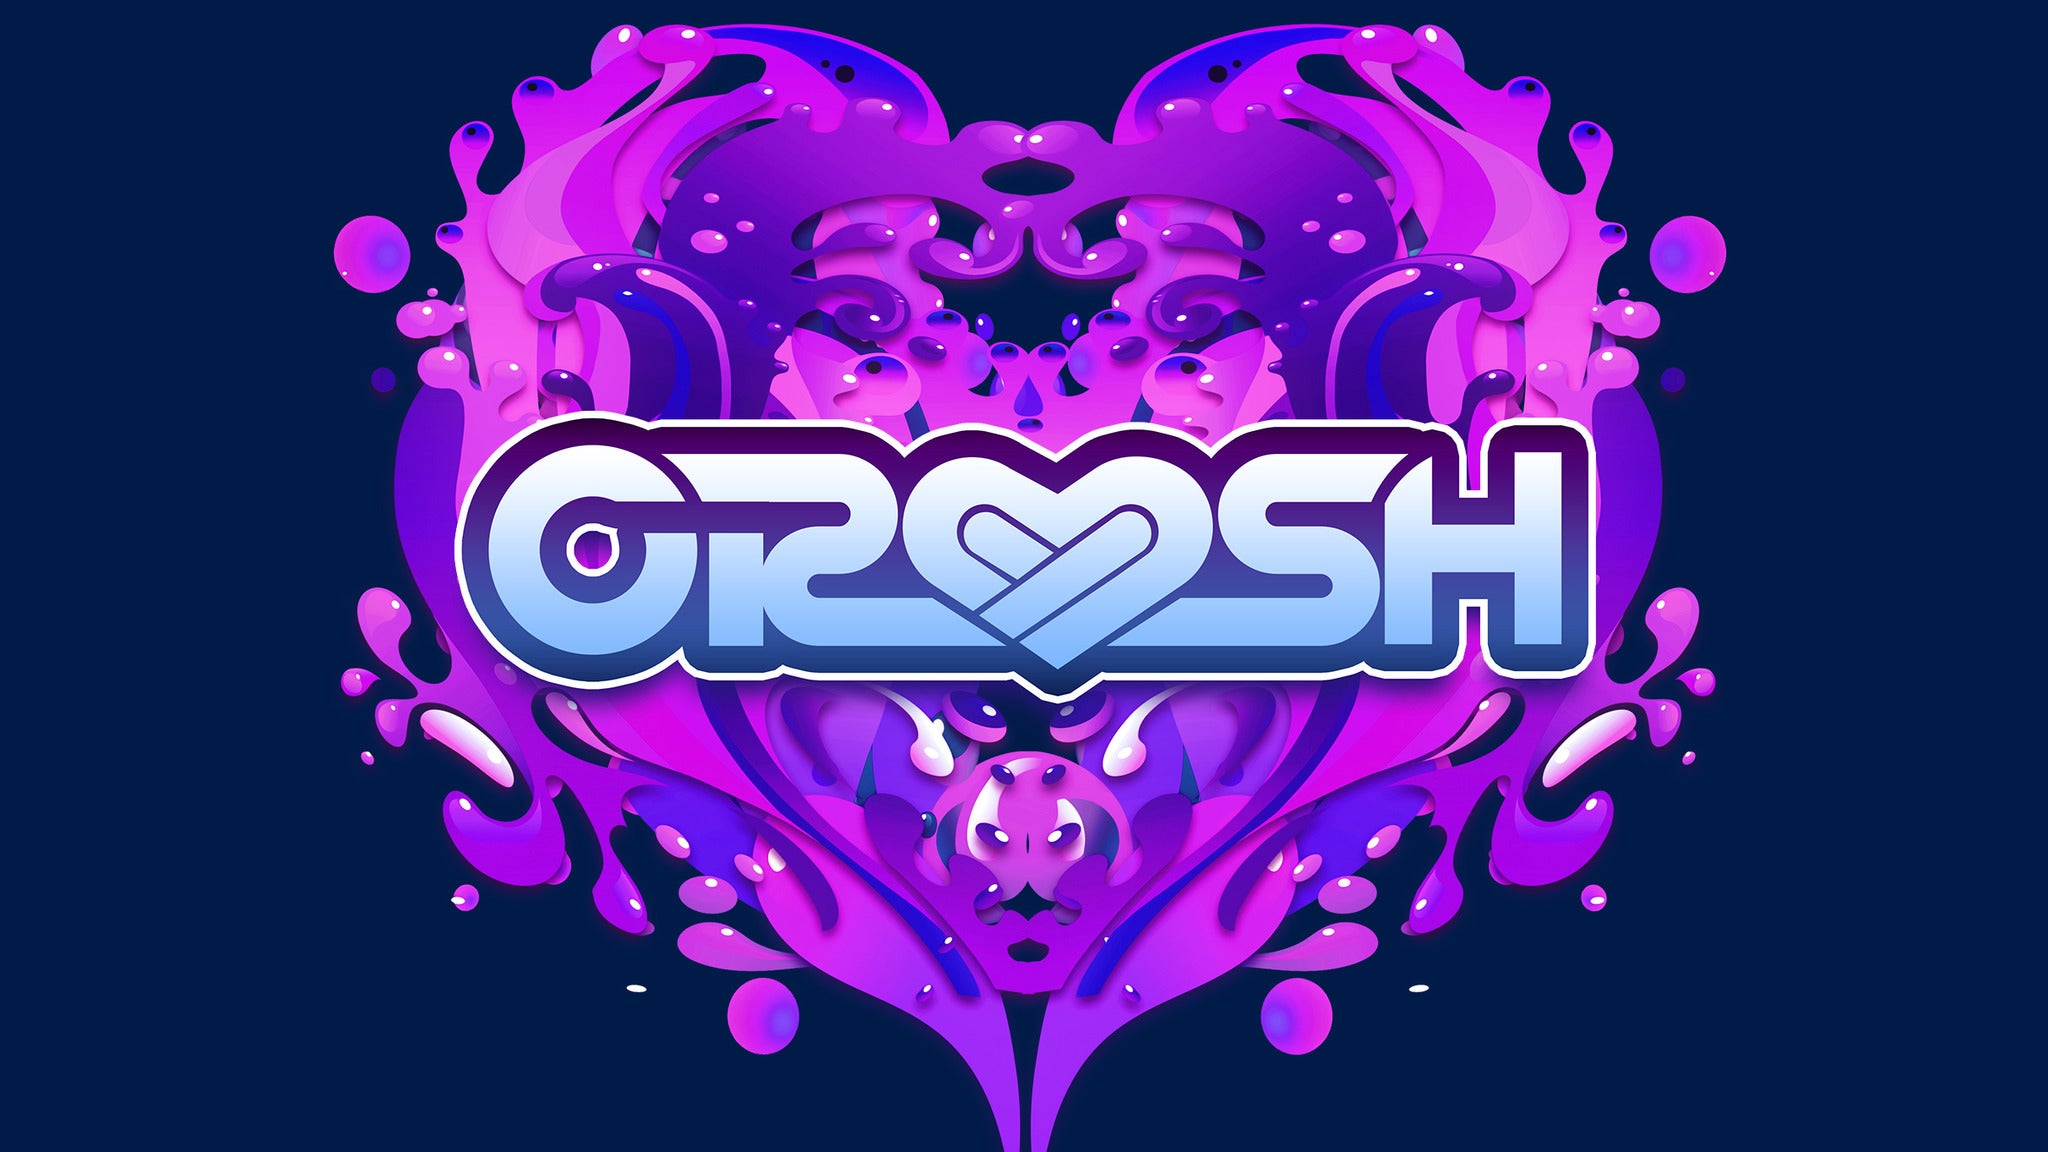 Crush - 2018 CRUSH ON YOU TOUR in North America [Wonderlost] in San Jose promo photo for Citi® Cardmember Preferred presale offer code